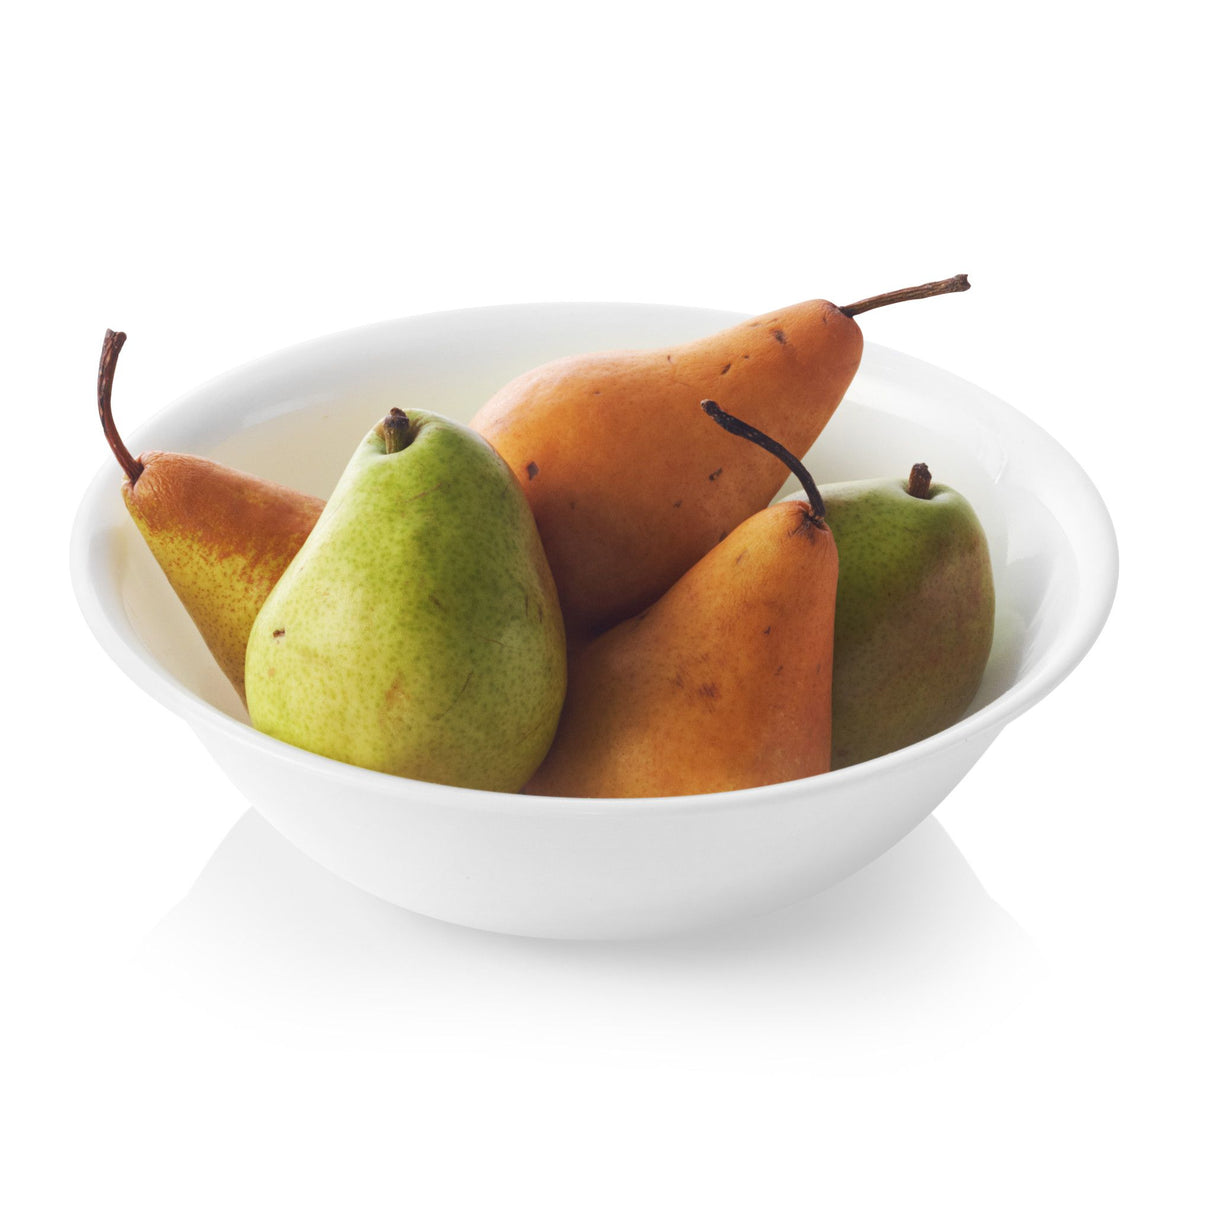  Pears in Bowl